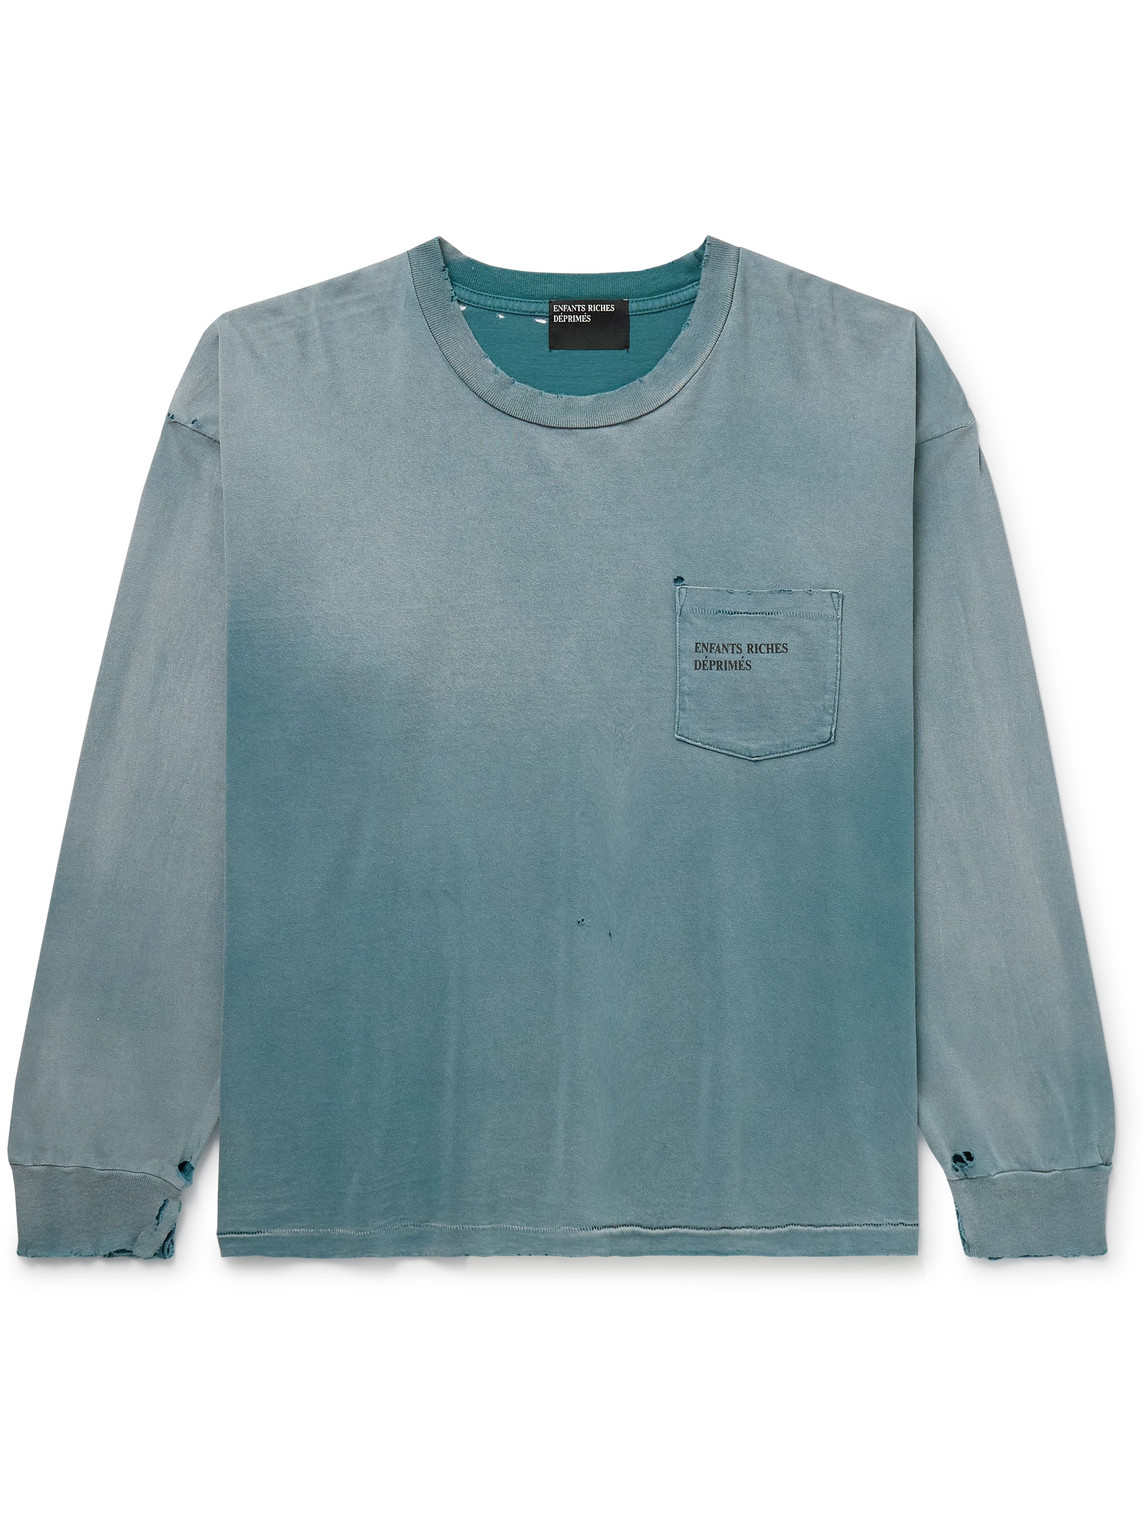 Enfants Riches Deprimes Thrashed Distressed Logo-print Cotton-jersey T-shirt In Blue